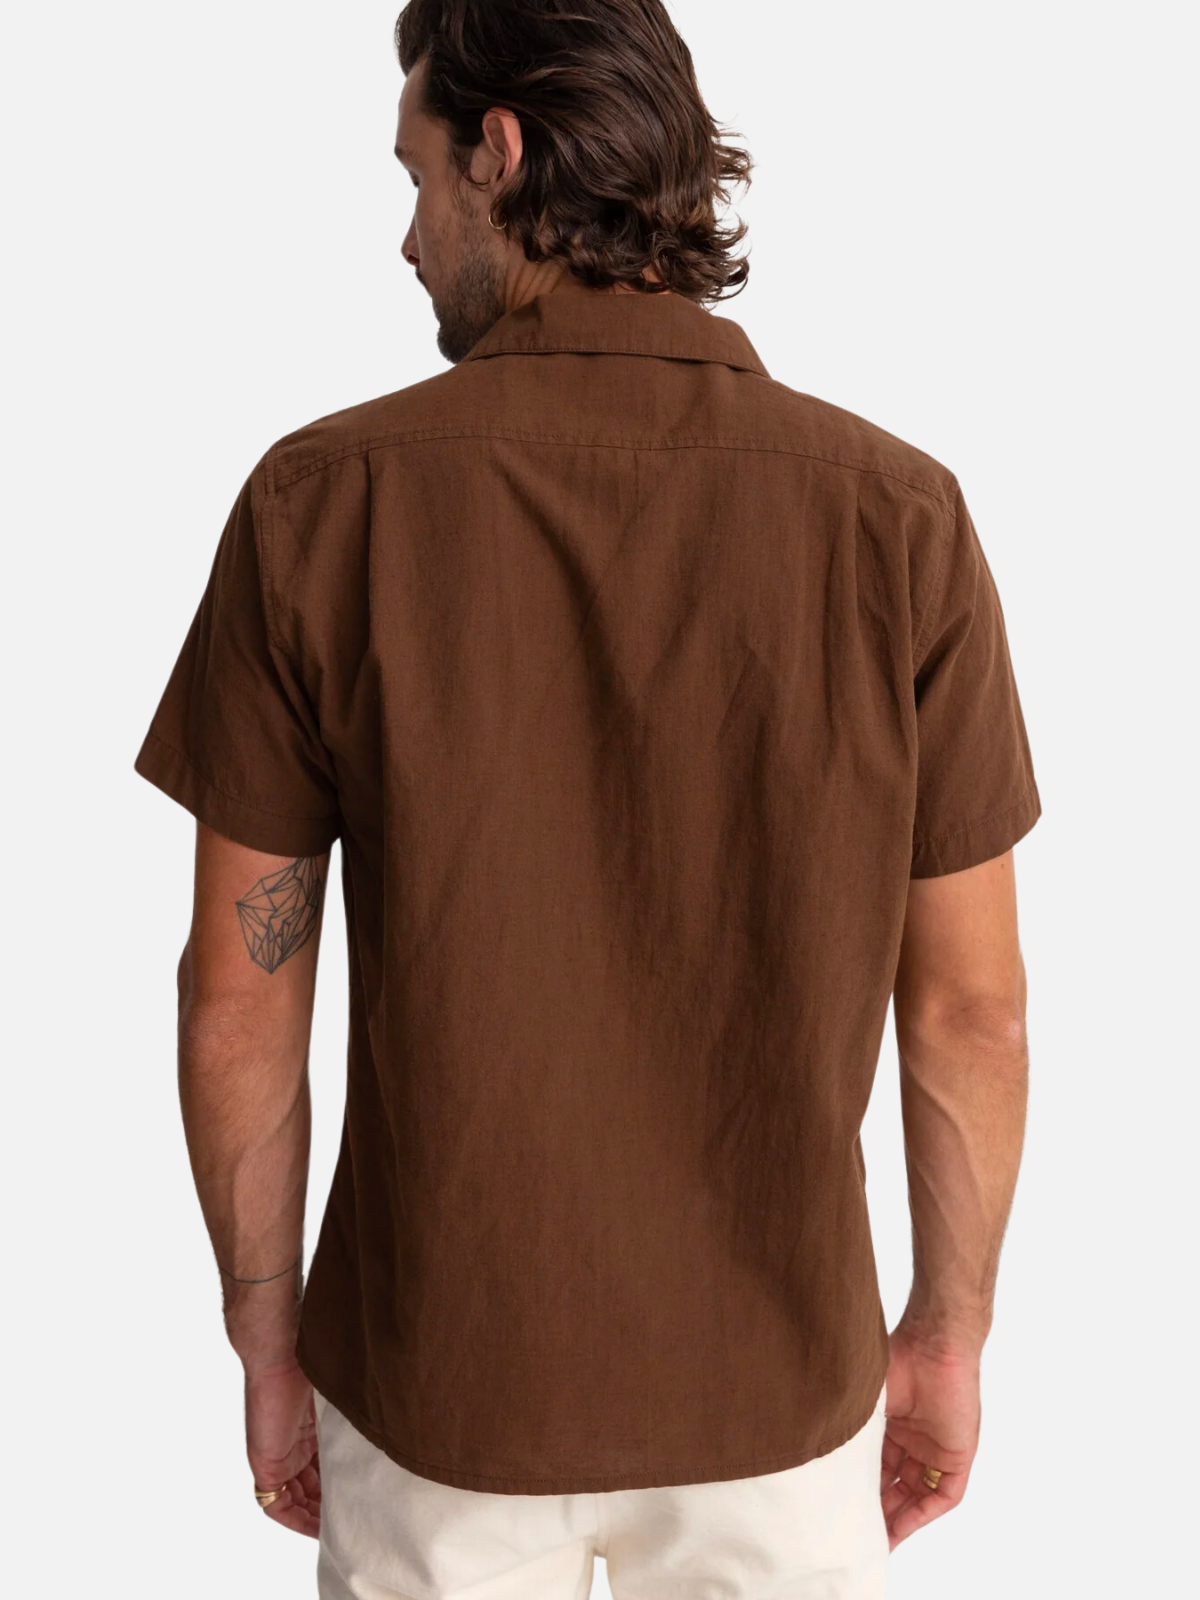 rhythm classic linen ss short sleeve shirt chocolate brown button up cotton linen blend kempt athens ga georgia men's clothing store